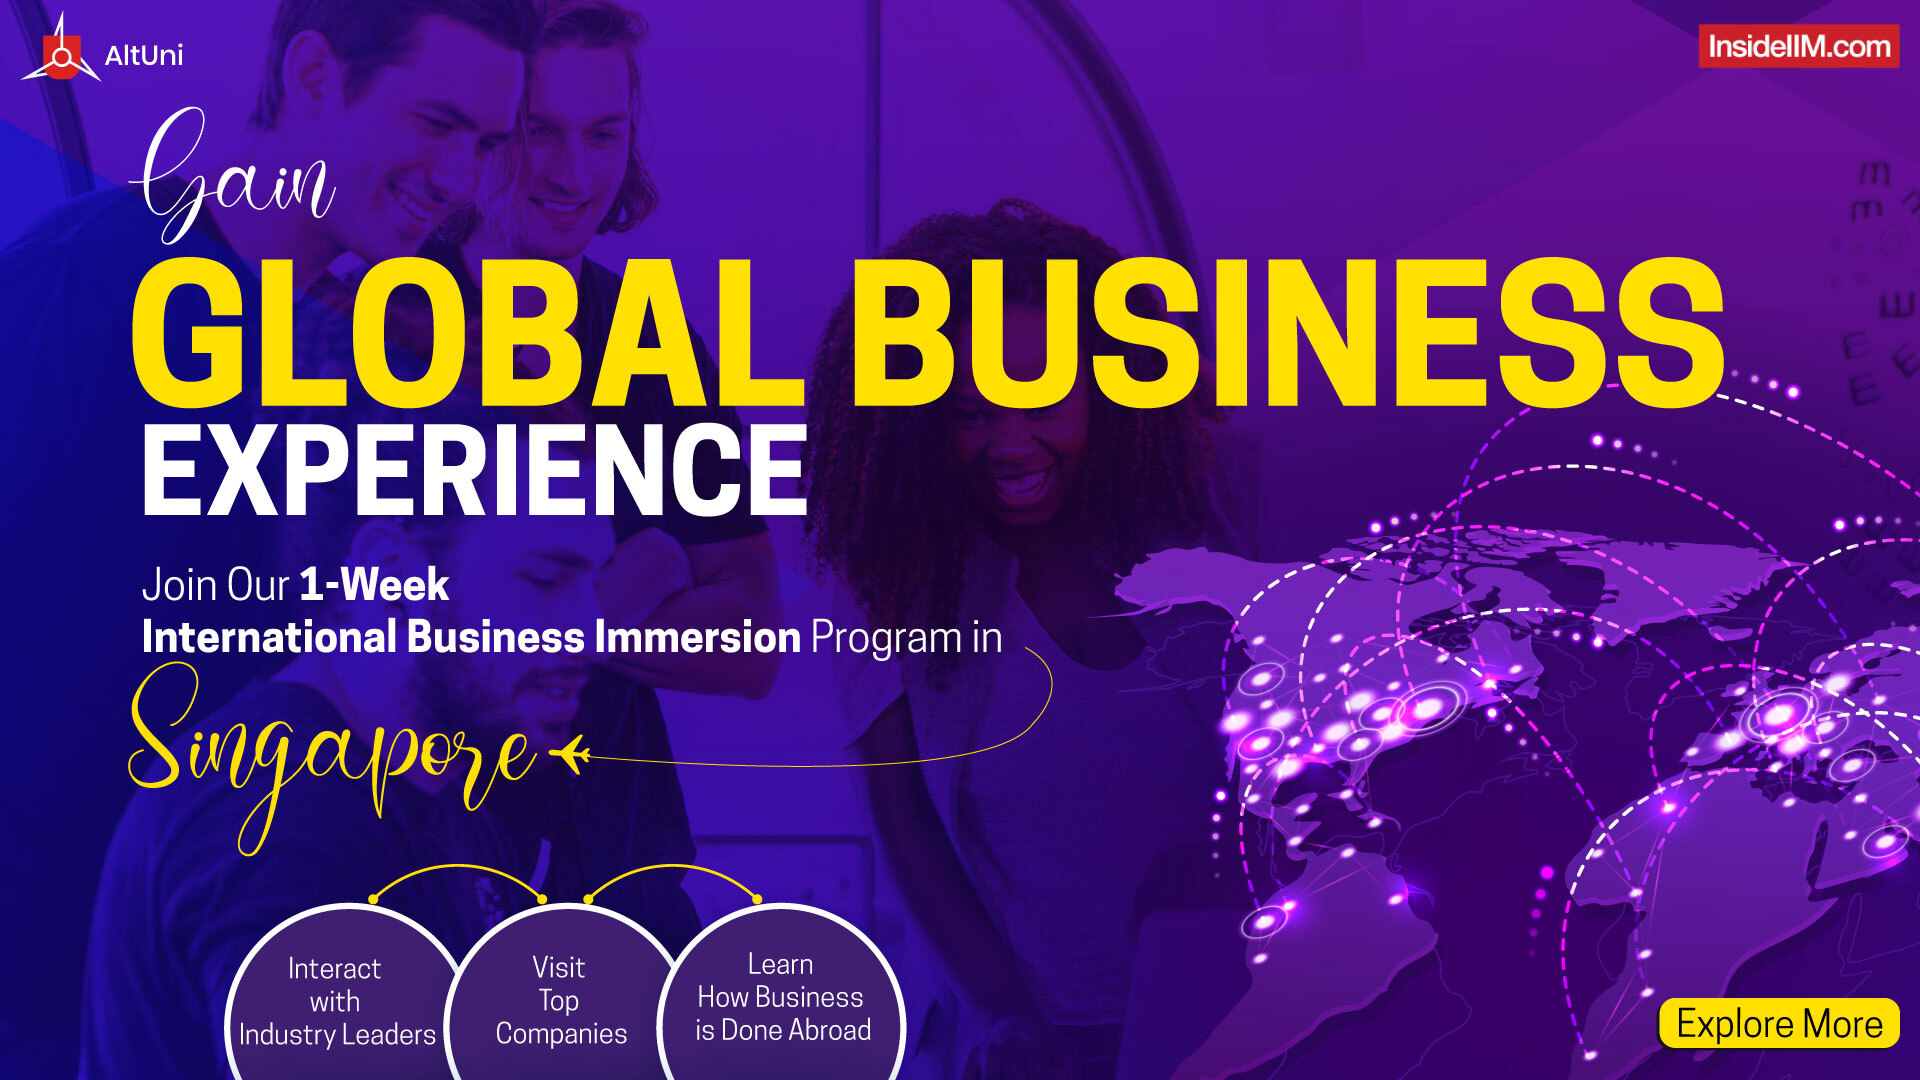 AltUni International Business Immersion - Singapore!